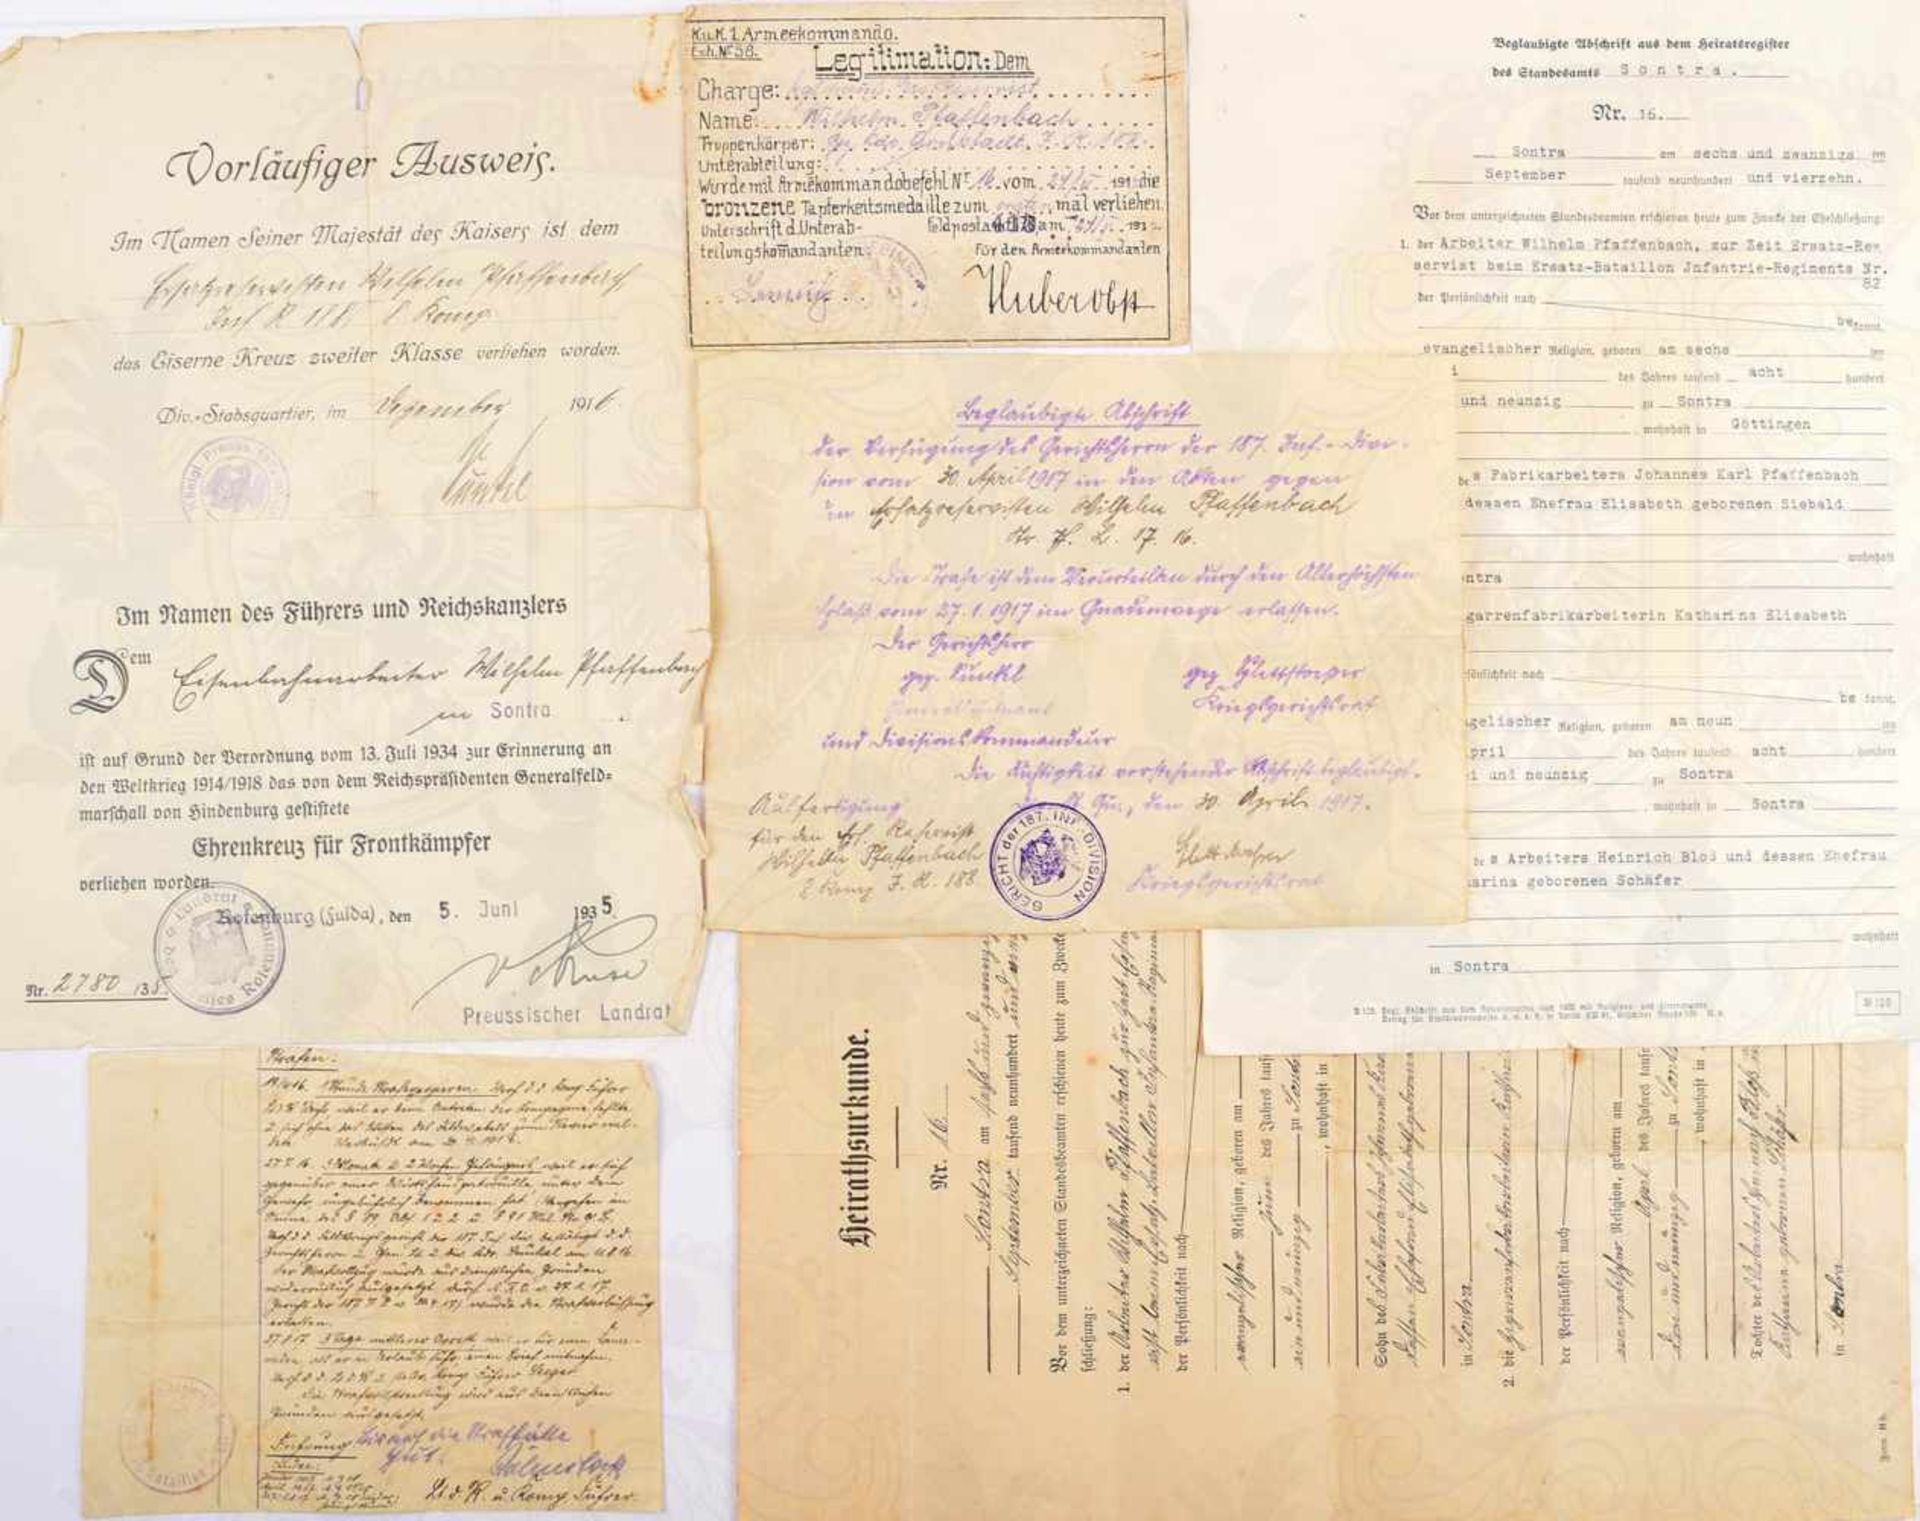 URKUNDEN- UND DOKUMENTENNACHLASS, Soldat v. IR Nr. 188, 3 VU: z. EK II 1914, Österr. Bronzene